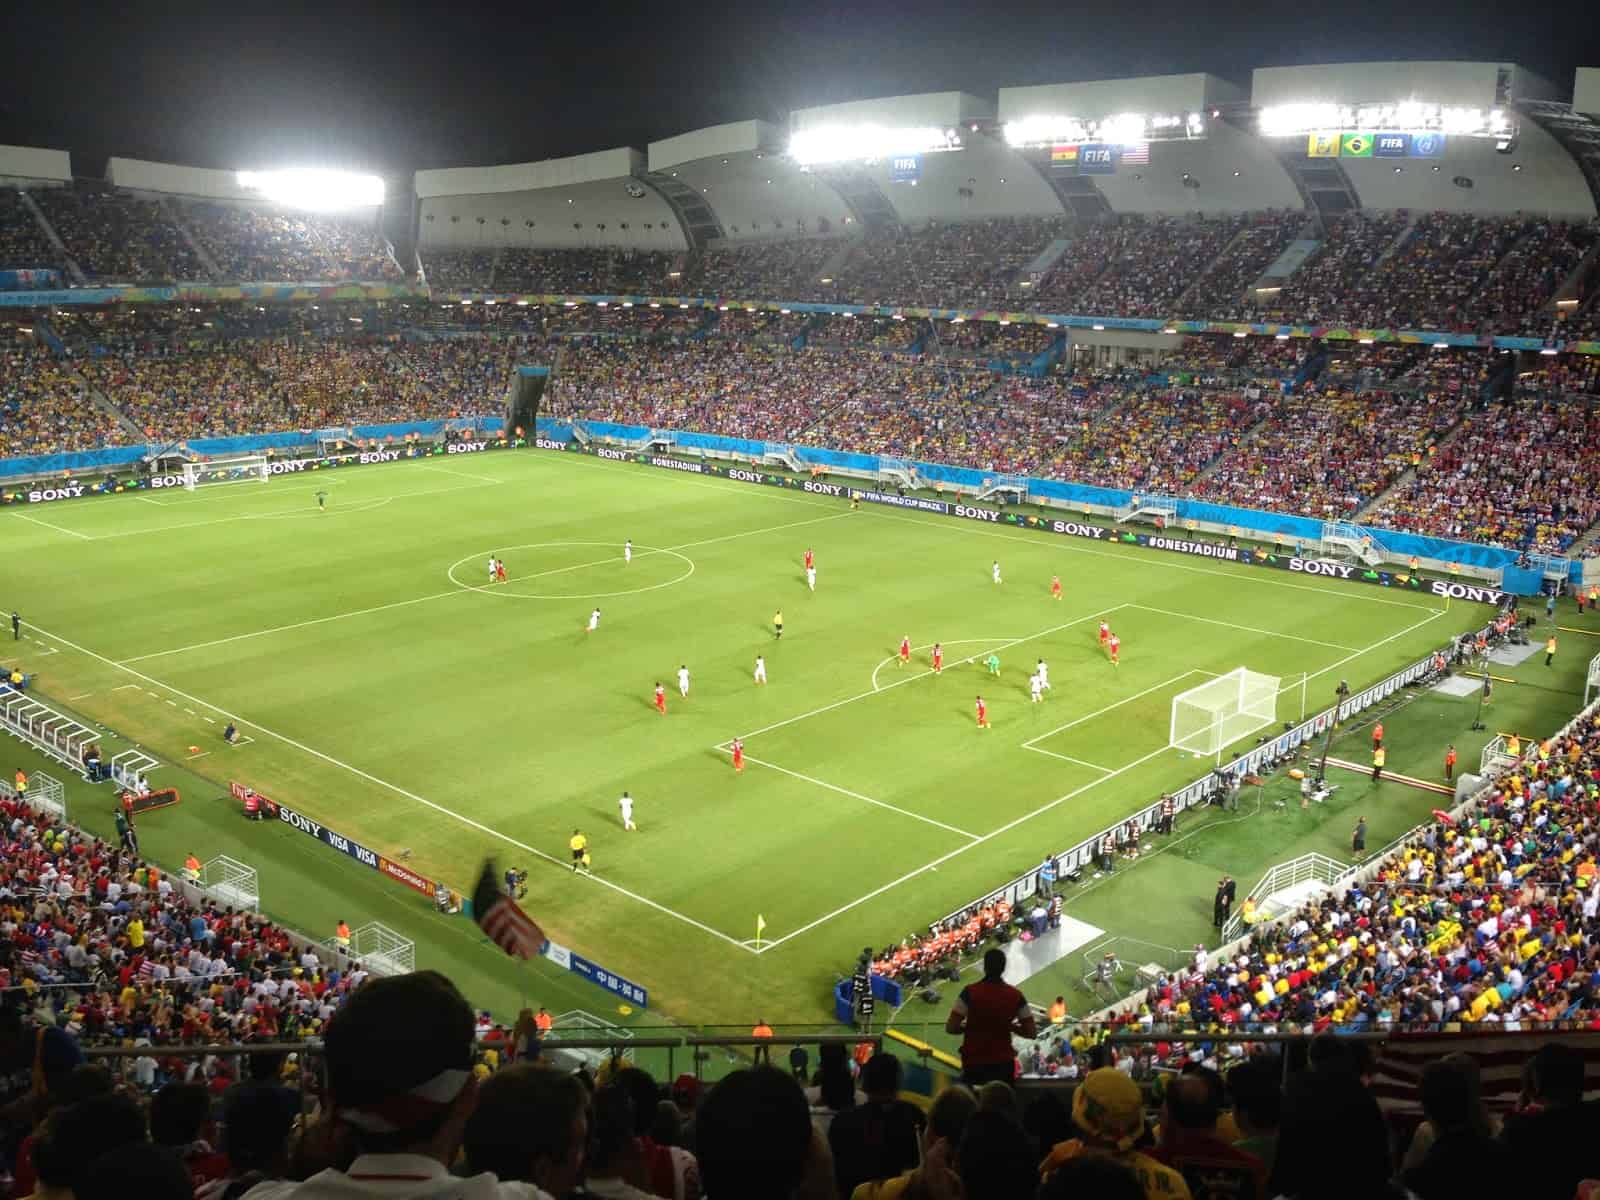 USA vs Ghana World Cup 2014 at Arena das Dunas in Natal, Brazil